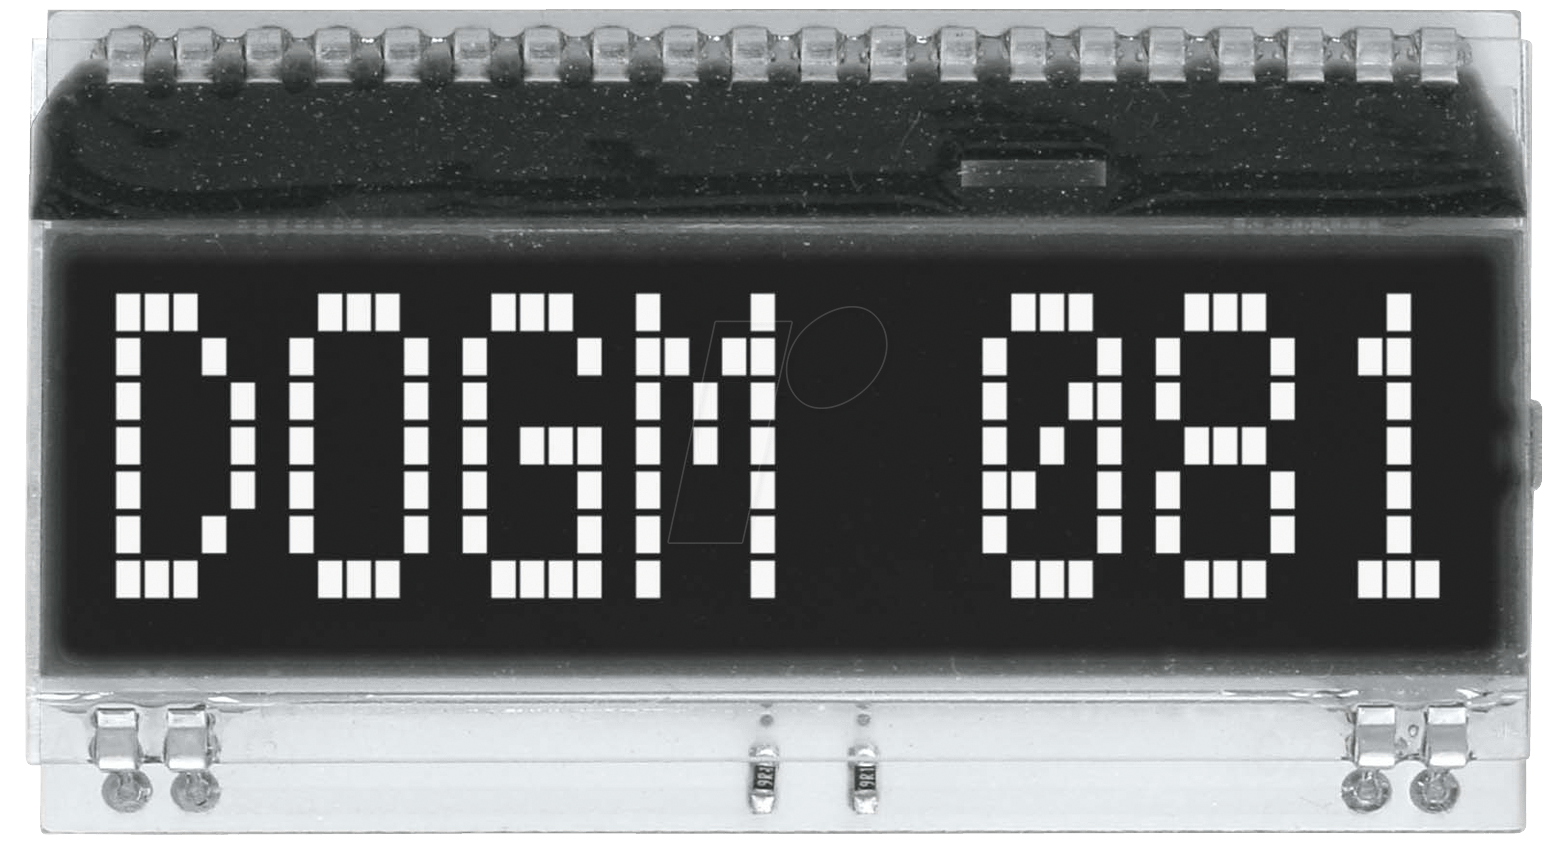 EA DOGM081S-A - LCD-Textmodul, 48,3 x 12 mm, schwarz von DISPLAY VISIONS